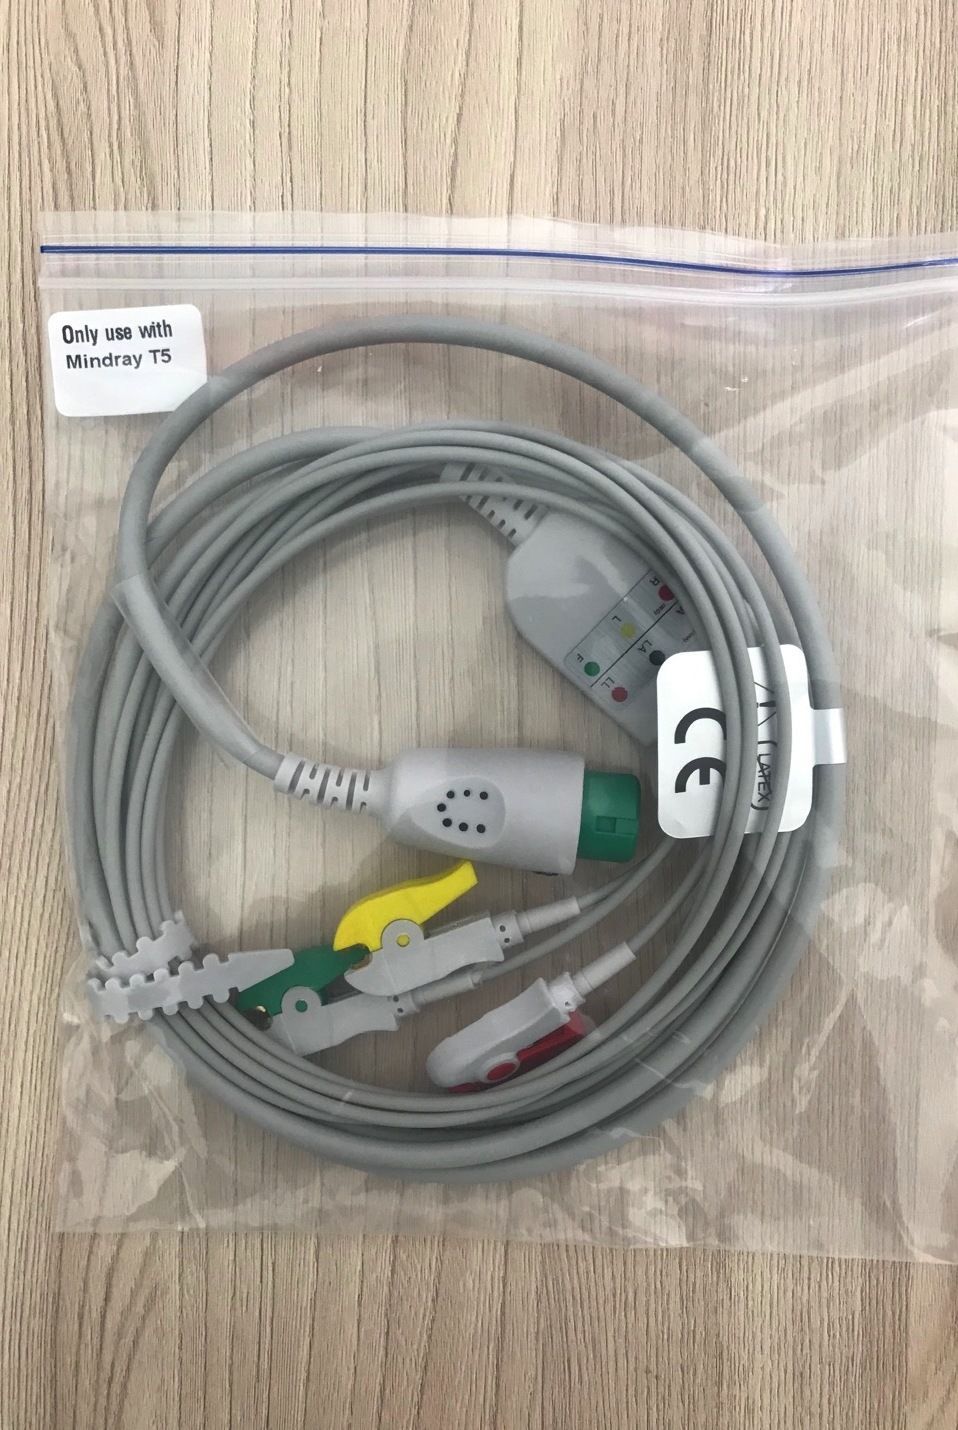 ECG 3 lead cable for Patient Monitor Mindray T5 & Umec_สายอีซีจีเคเบิ้ลสำหรับเครื่องมอนิเตอร์ผู้ป่วย Mindray T5 และ Umec